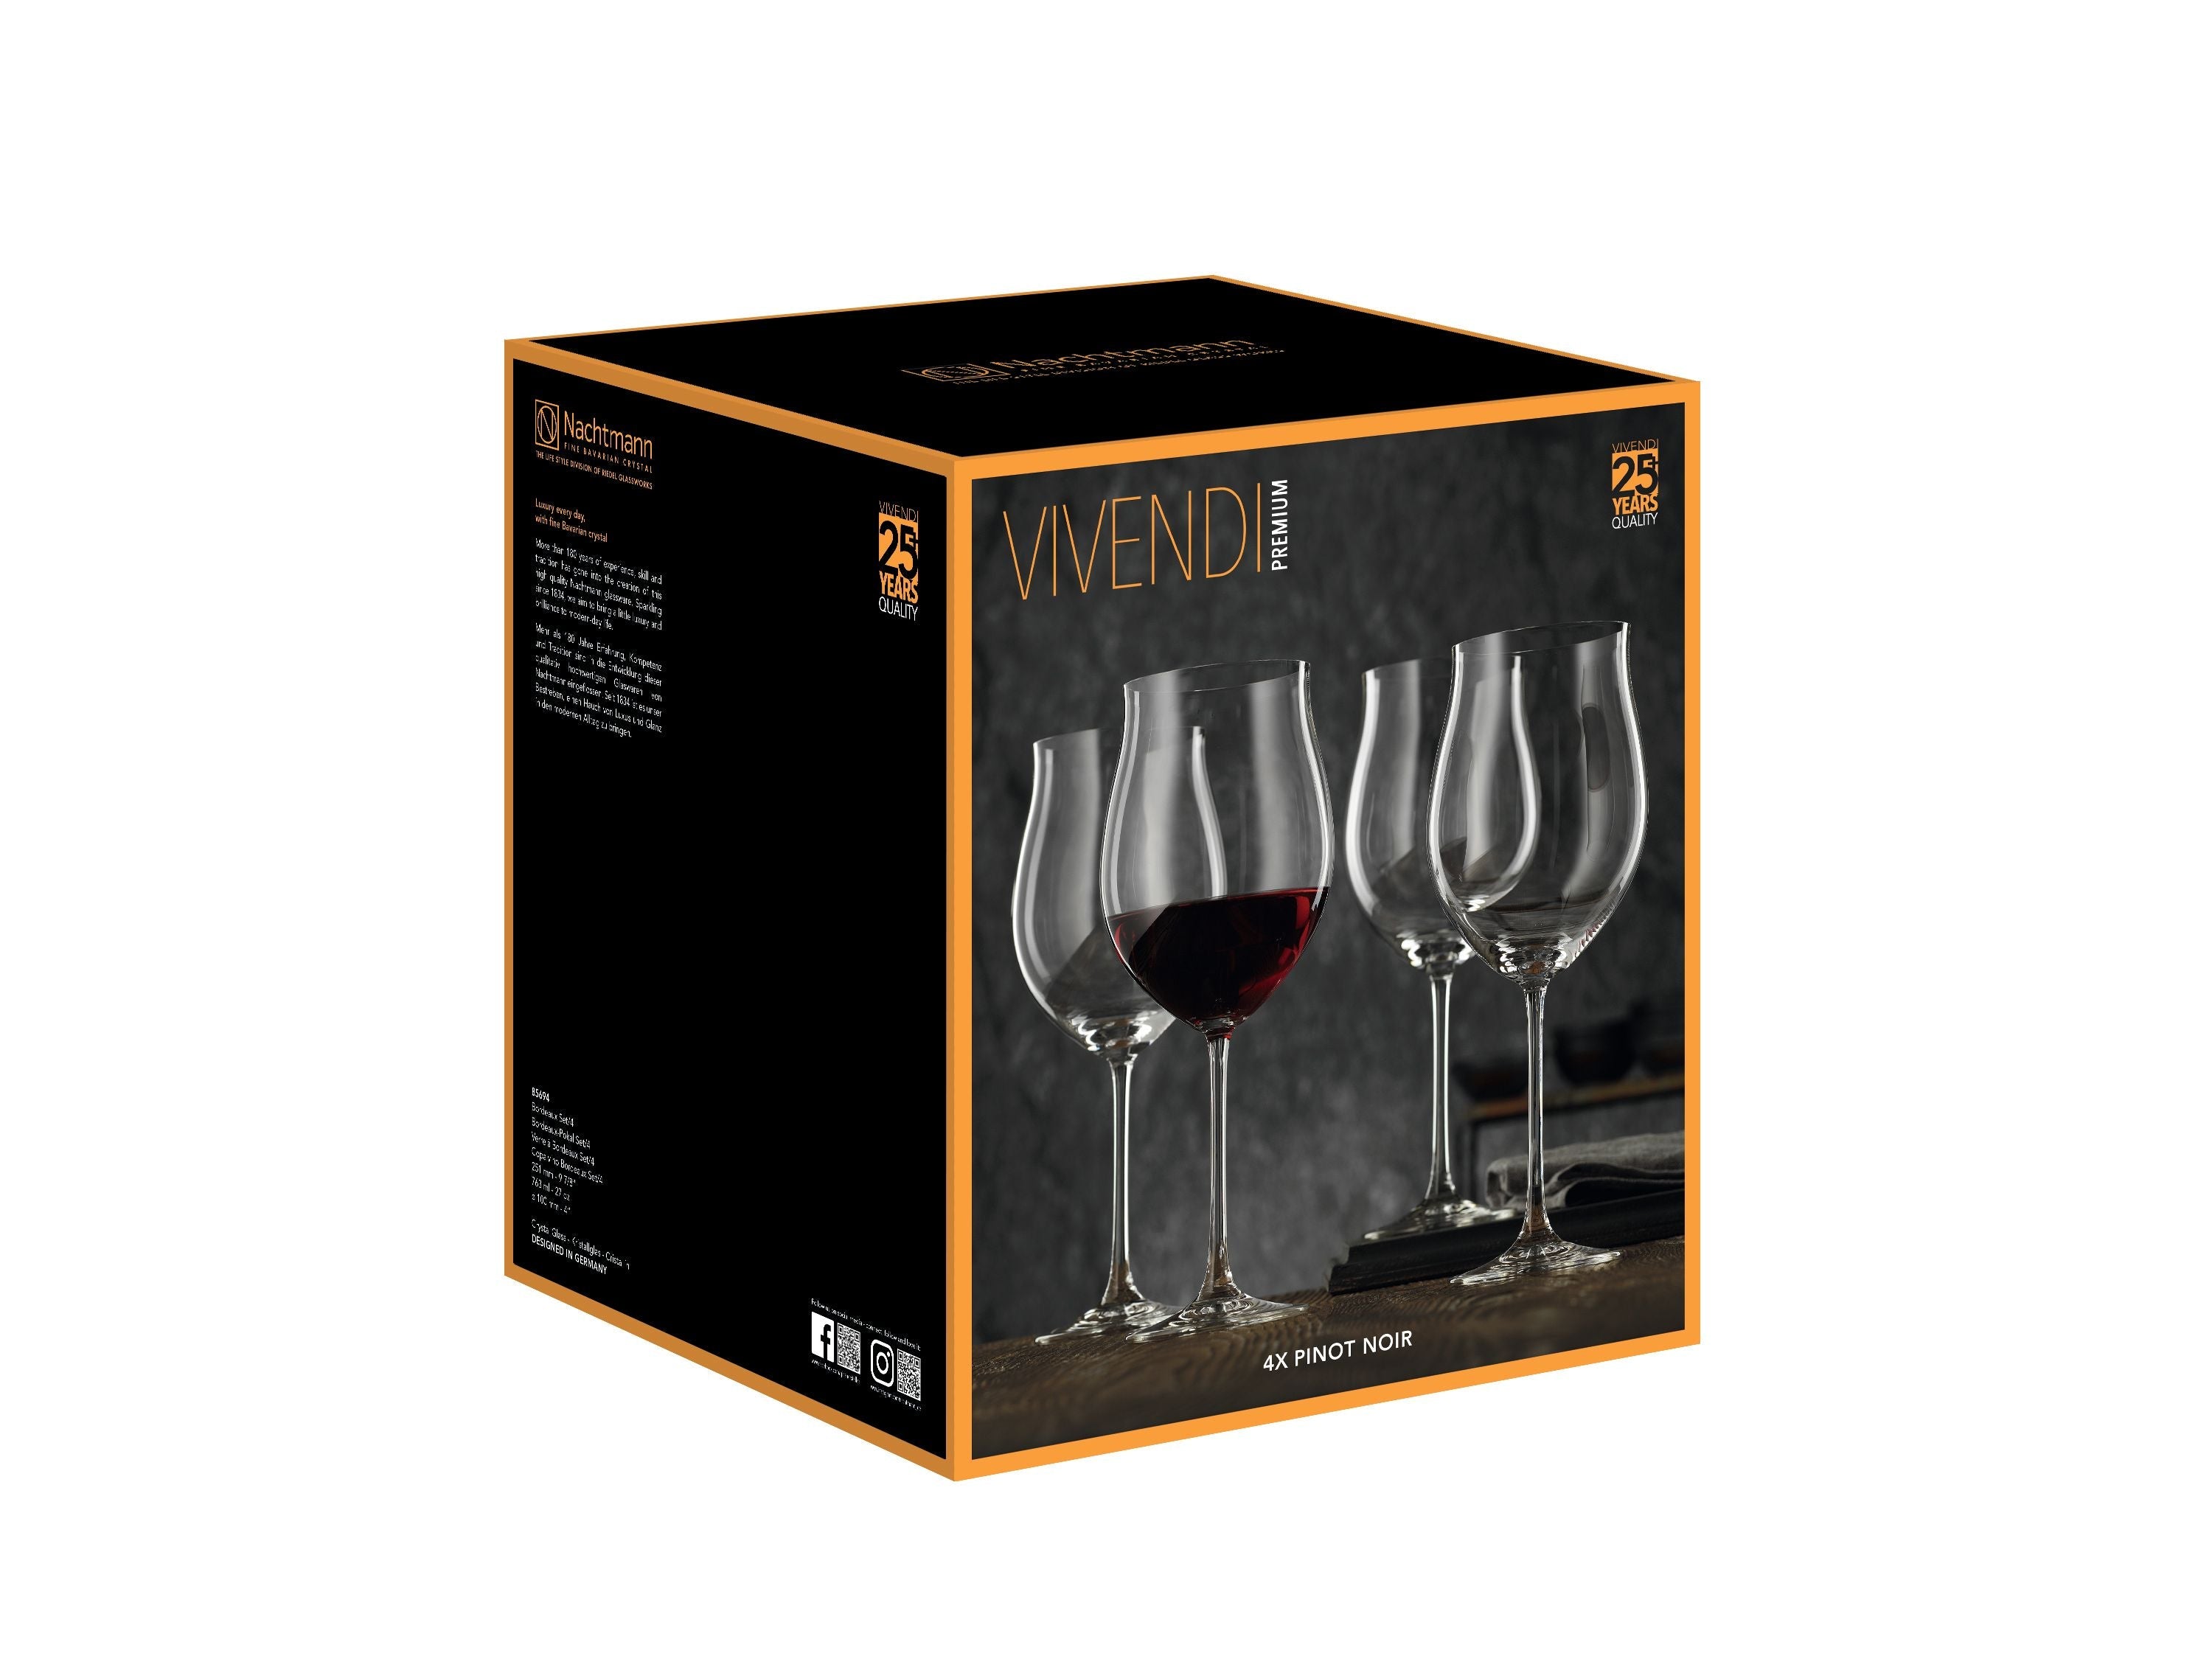 Nachtmann Vivendi premium pinot noir wijnglas 897 ml, set van 4